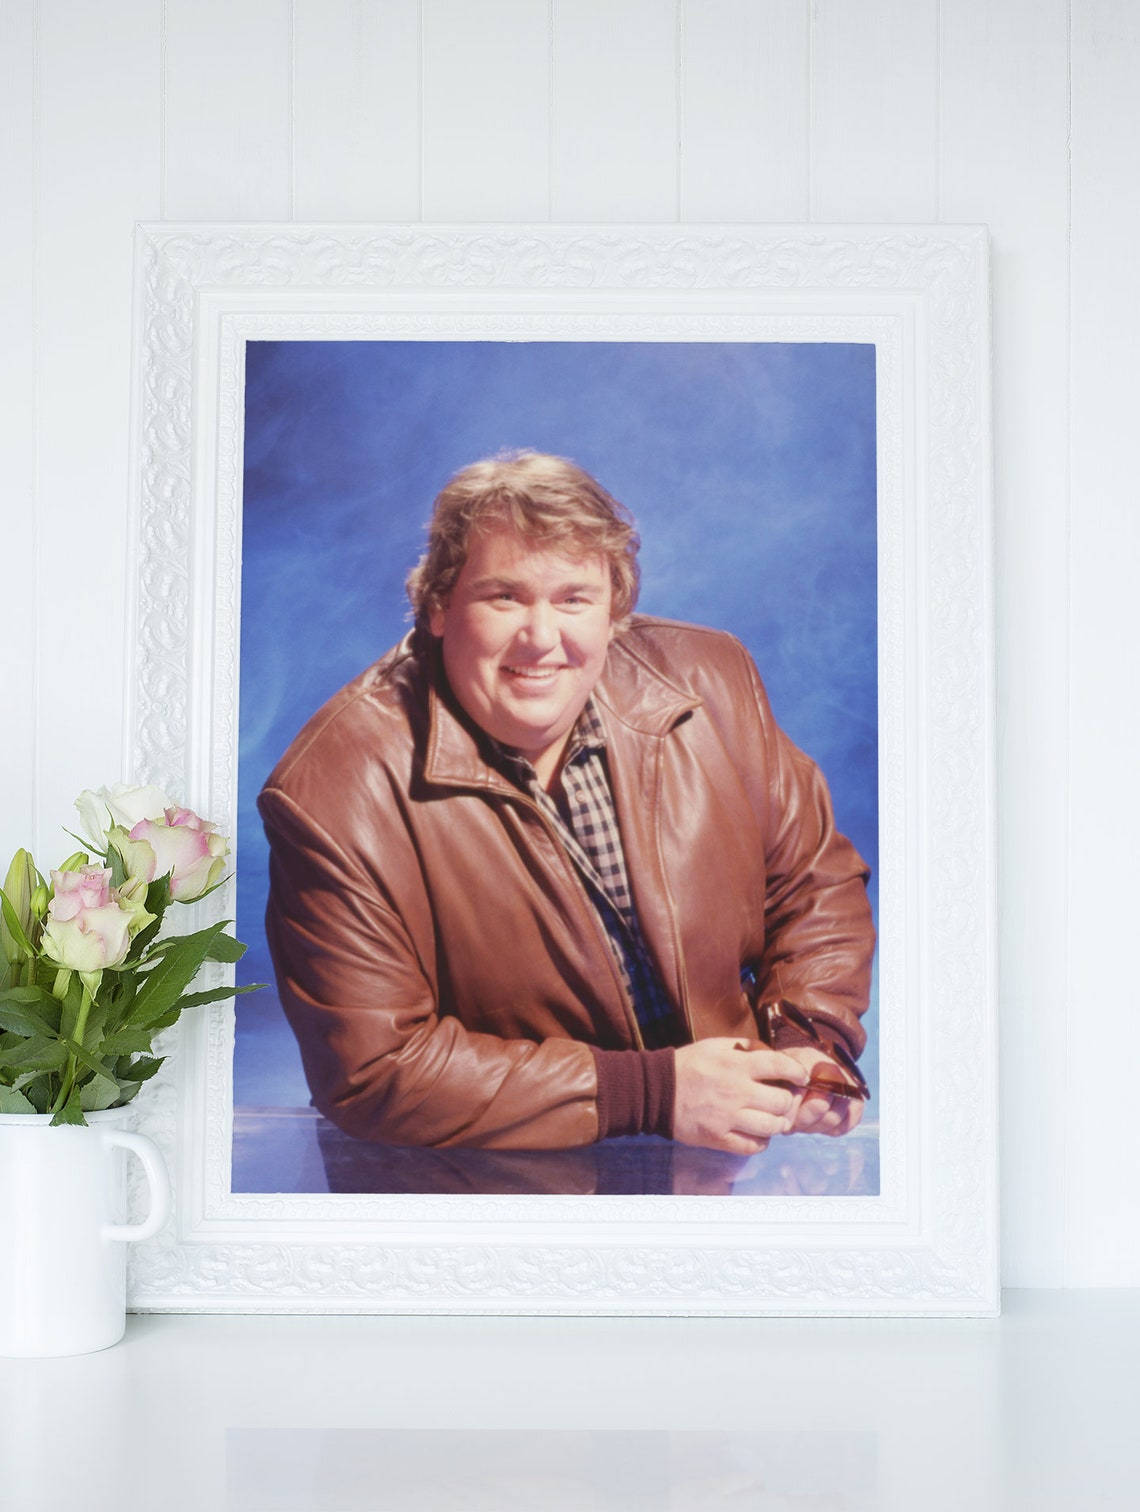 Outstanding Comedian John Candy in Frame Wallpaper